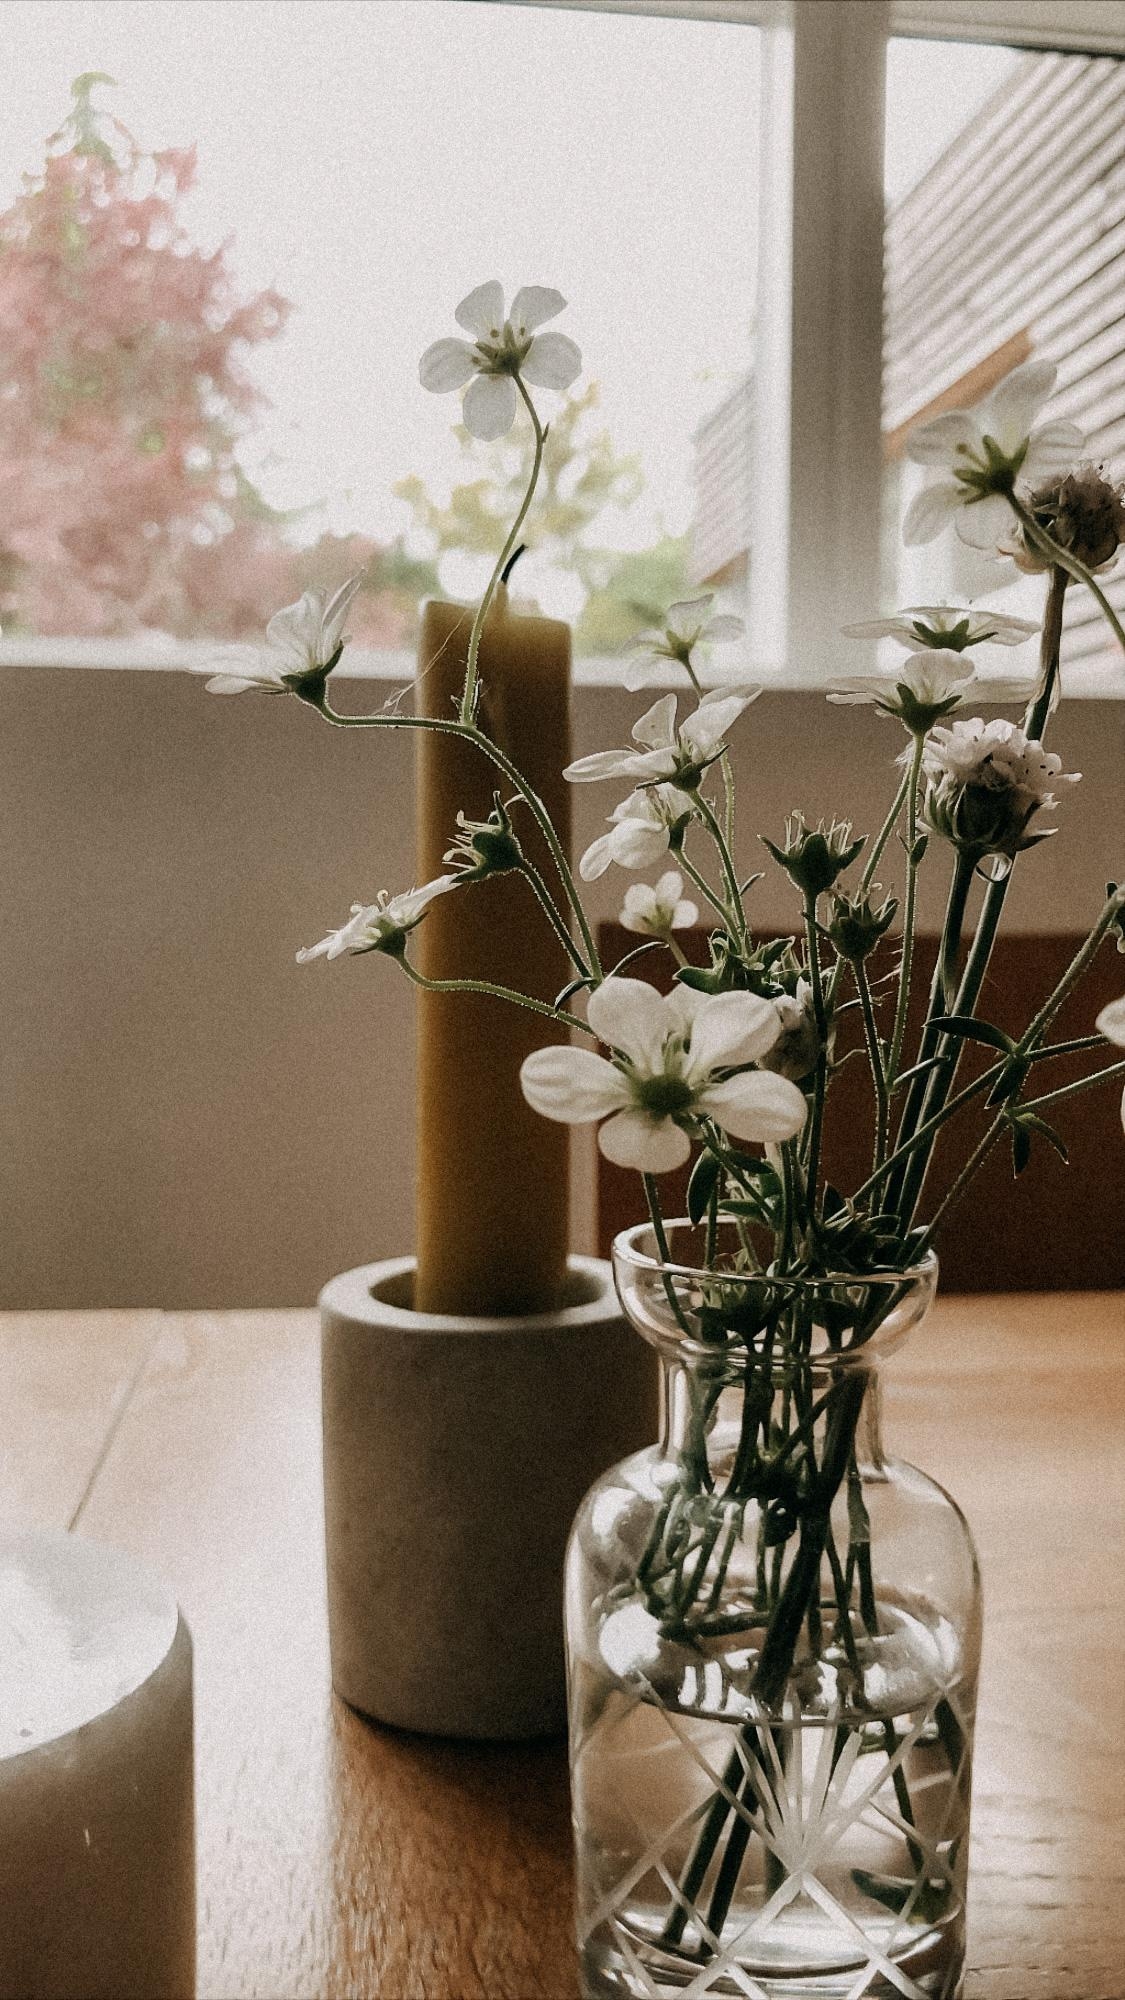 Eßzimmer with a view.
#flowers #minibouquet #vase #velfacfenster #fenster #gardenview